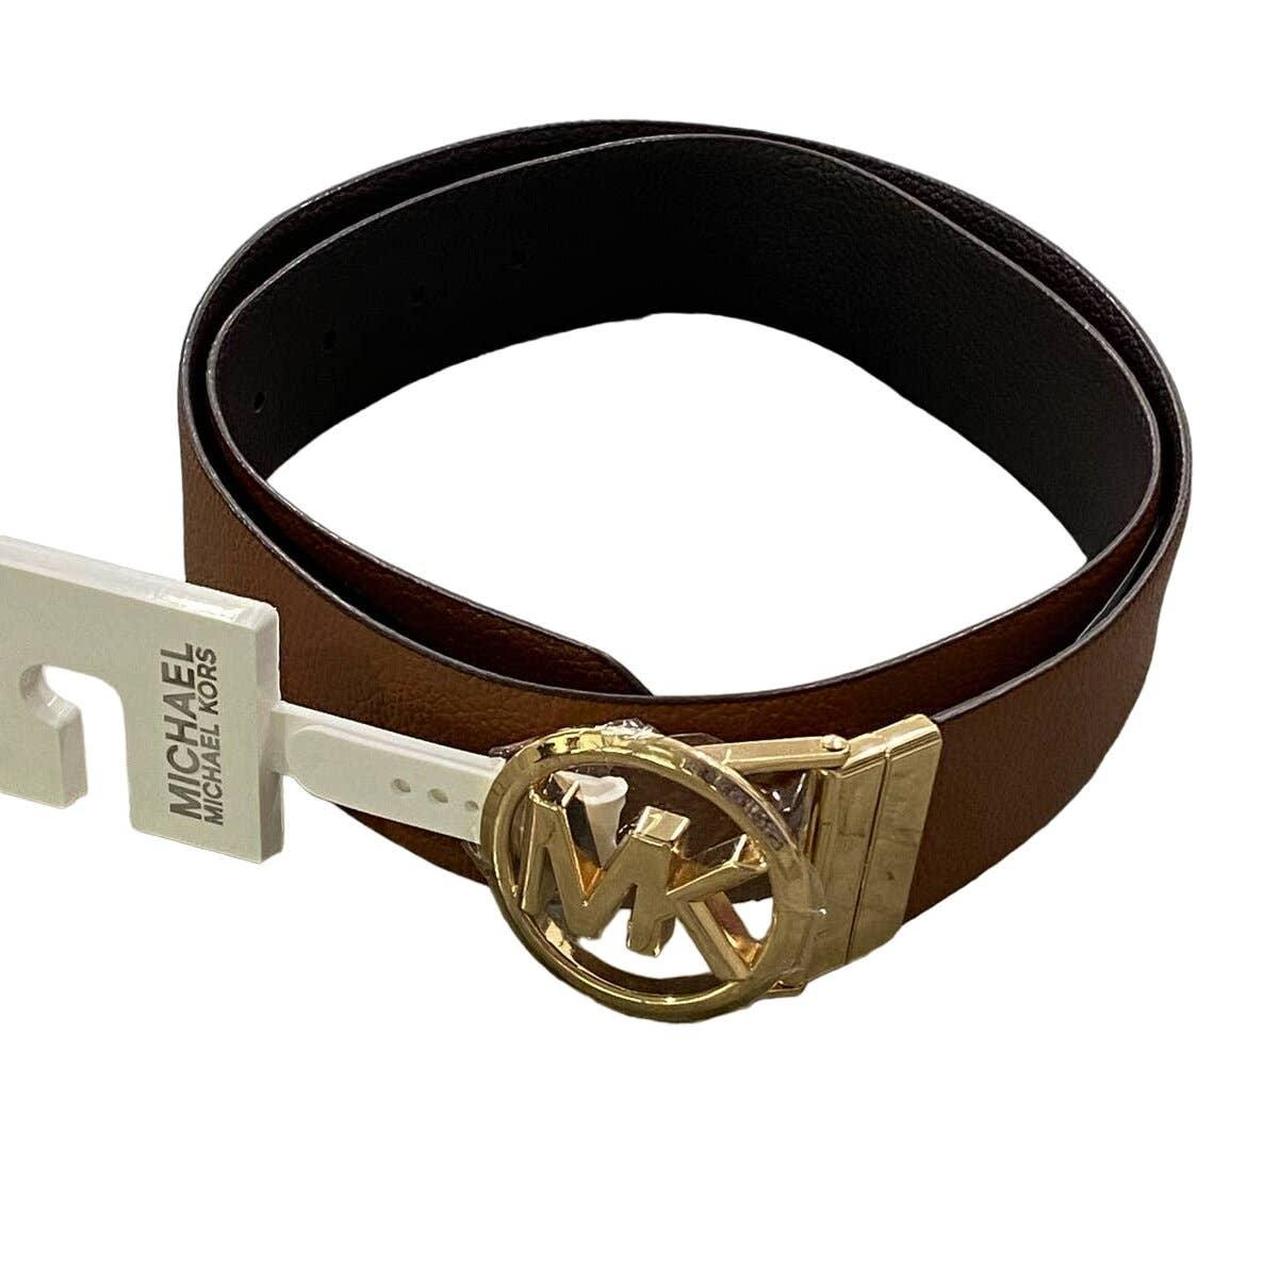 Michael Kors Womens Reversible MK Logo Gold Buckle Brown/Gold Belt